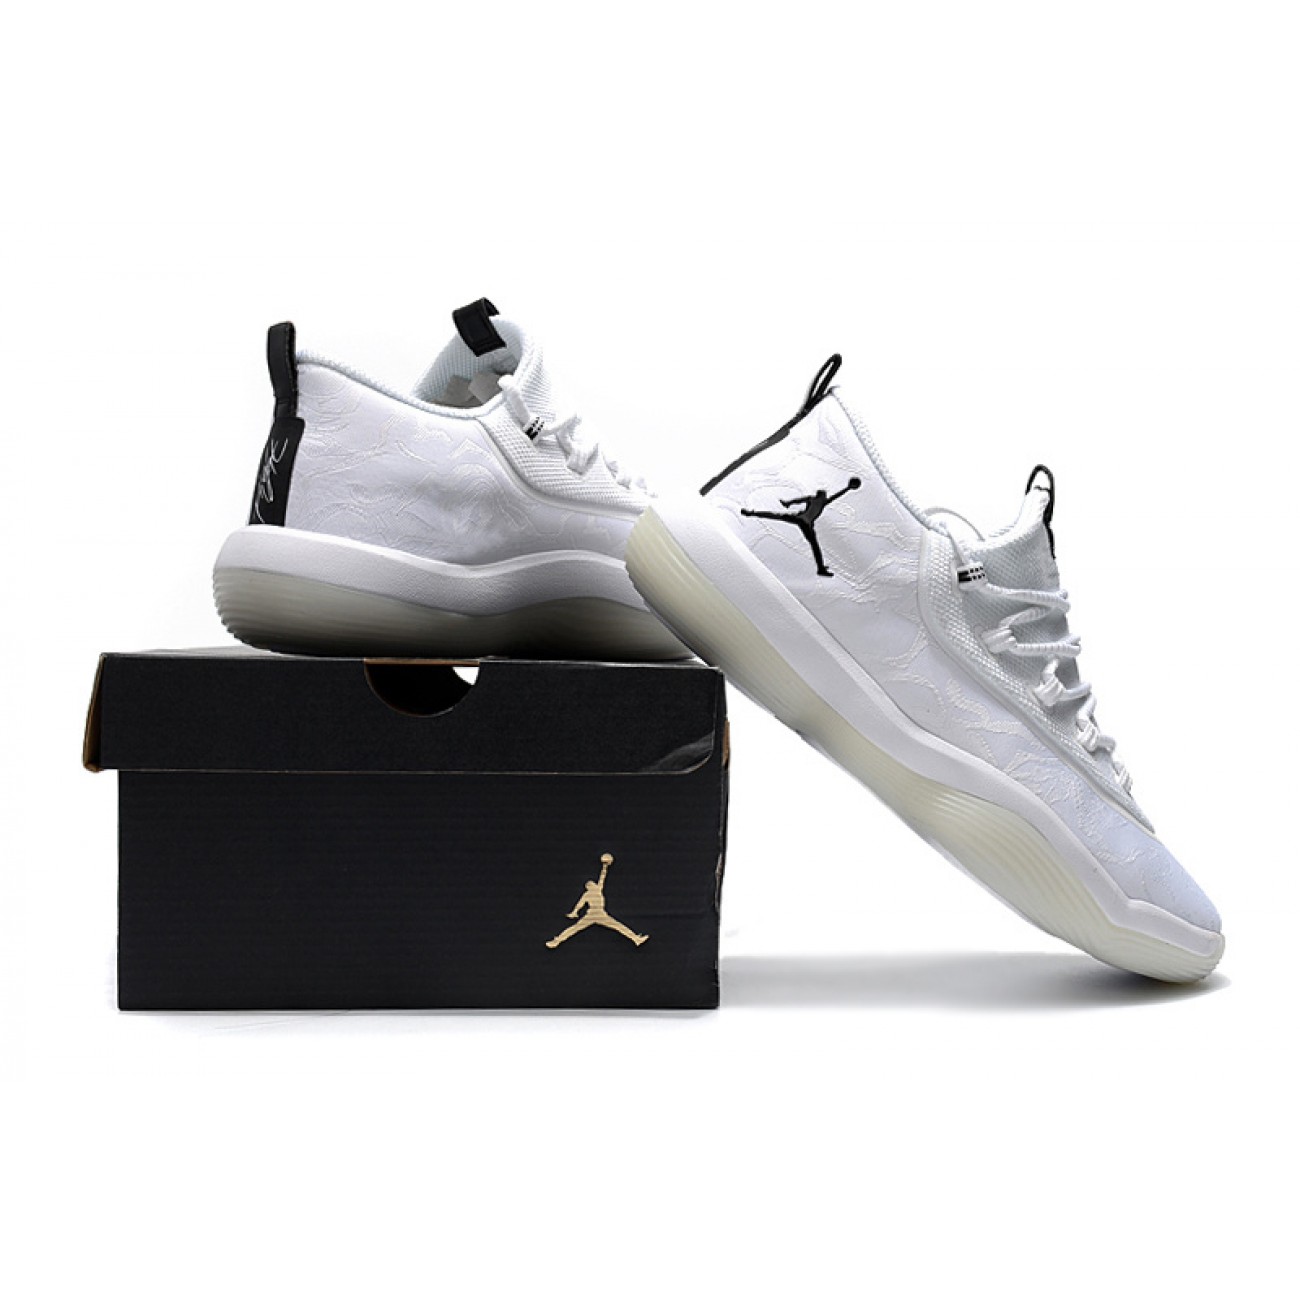 Air Jordan Super Fly Low Basketball Shoes White/Black